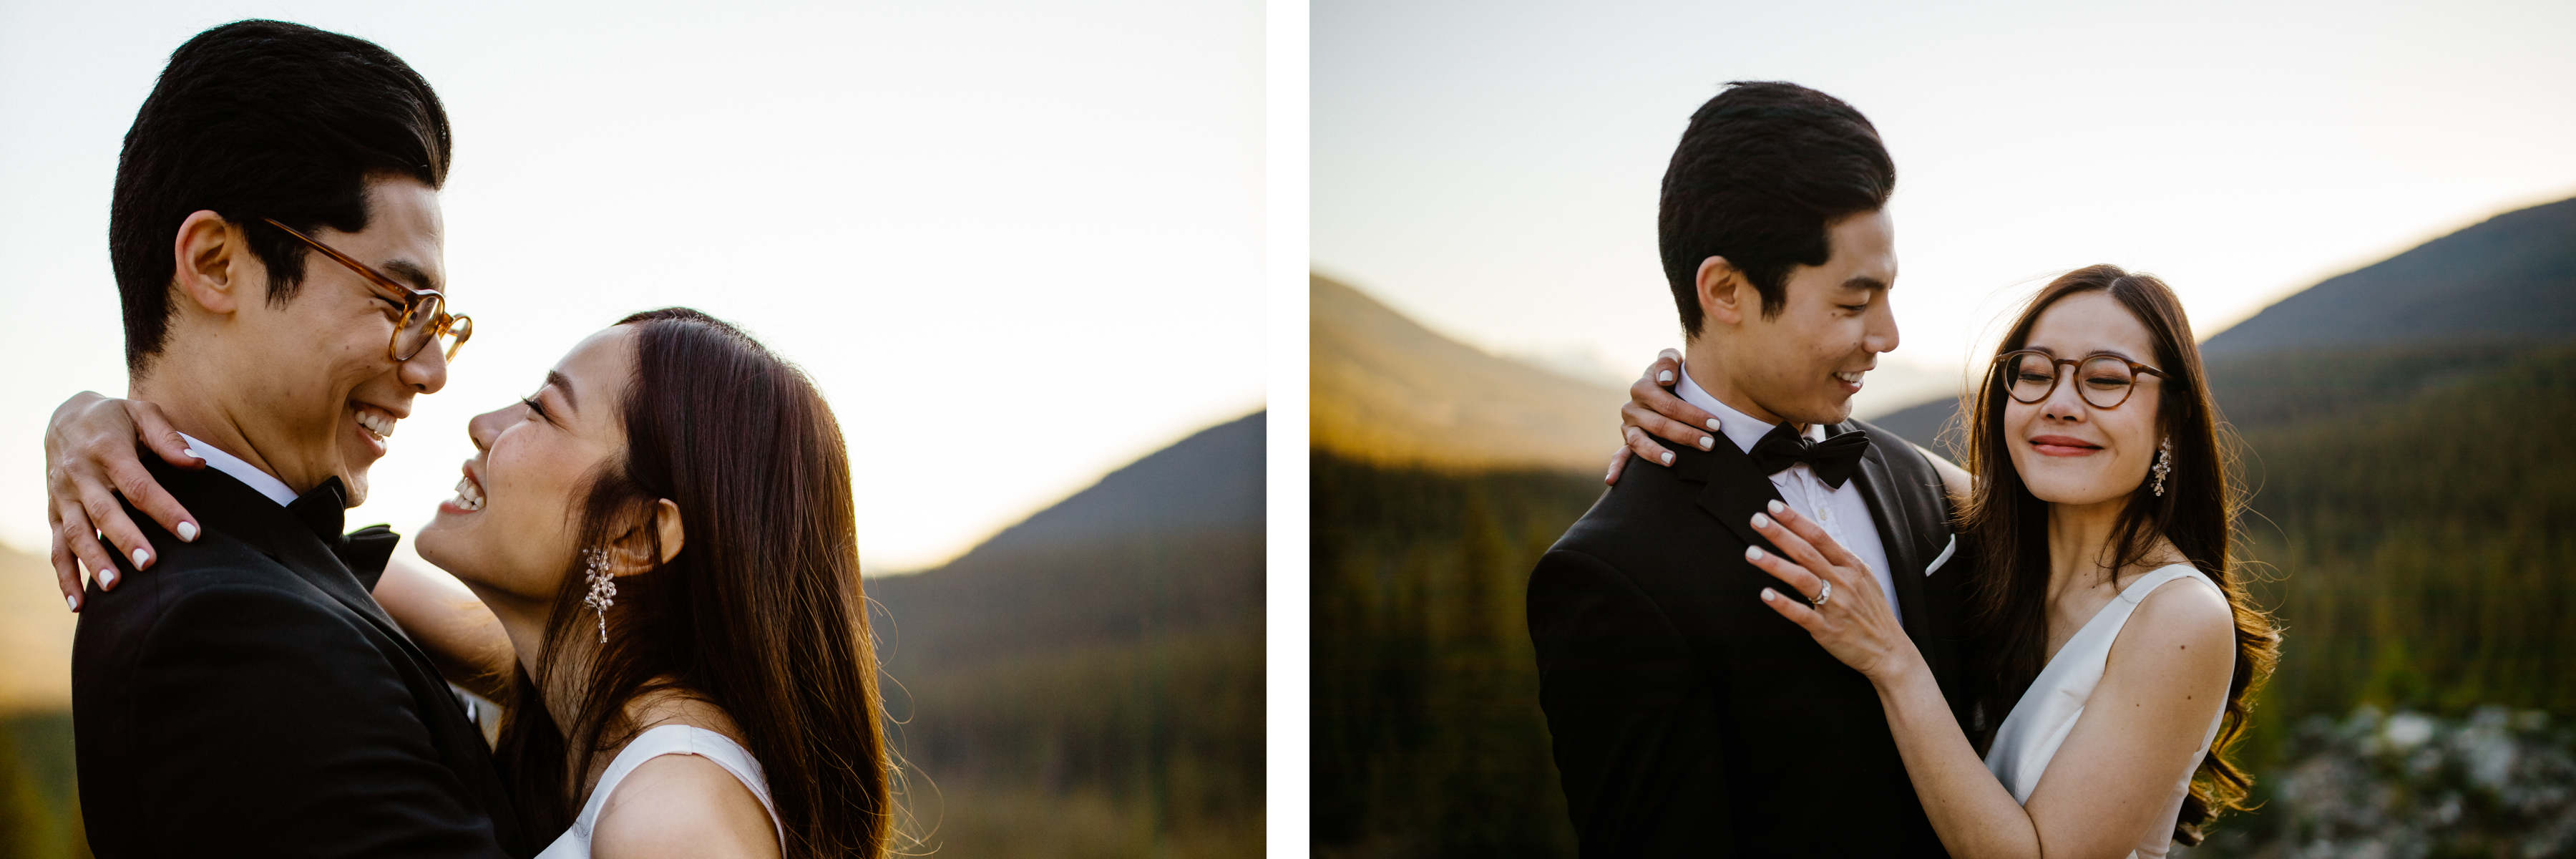 Banff Pre Wedding Photography at Moraine Lake - Photo 14